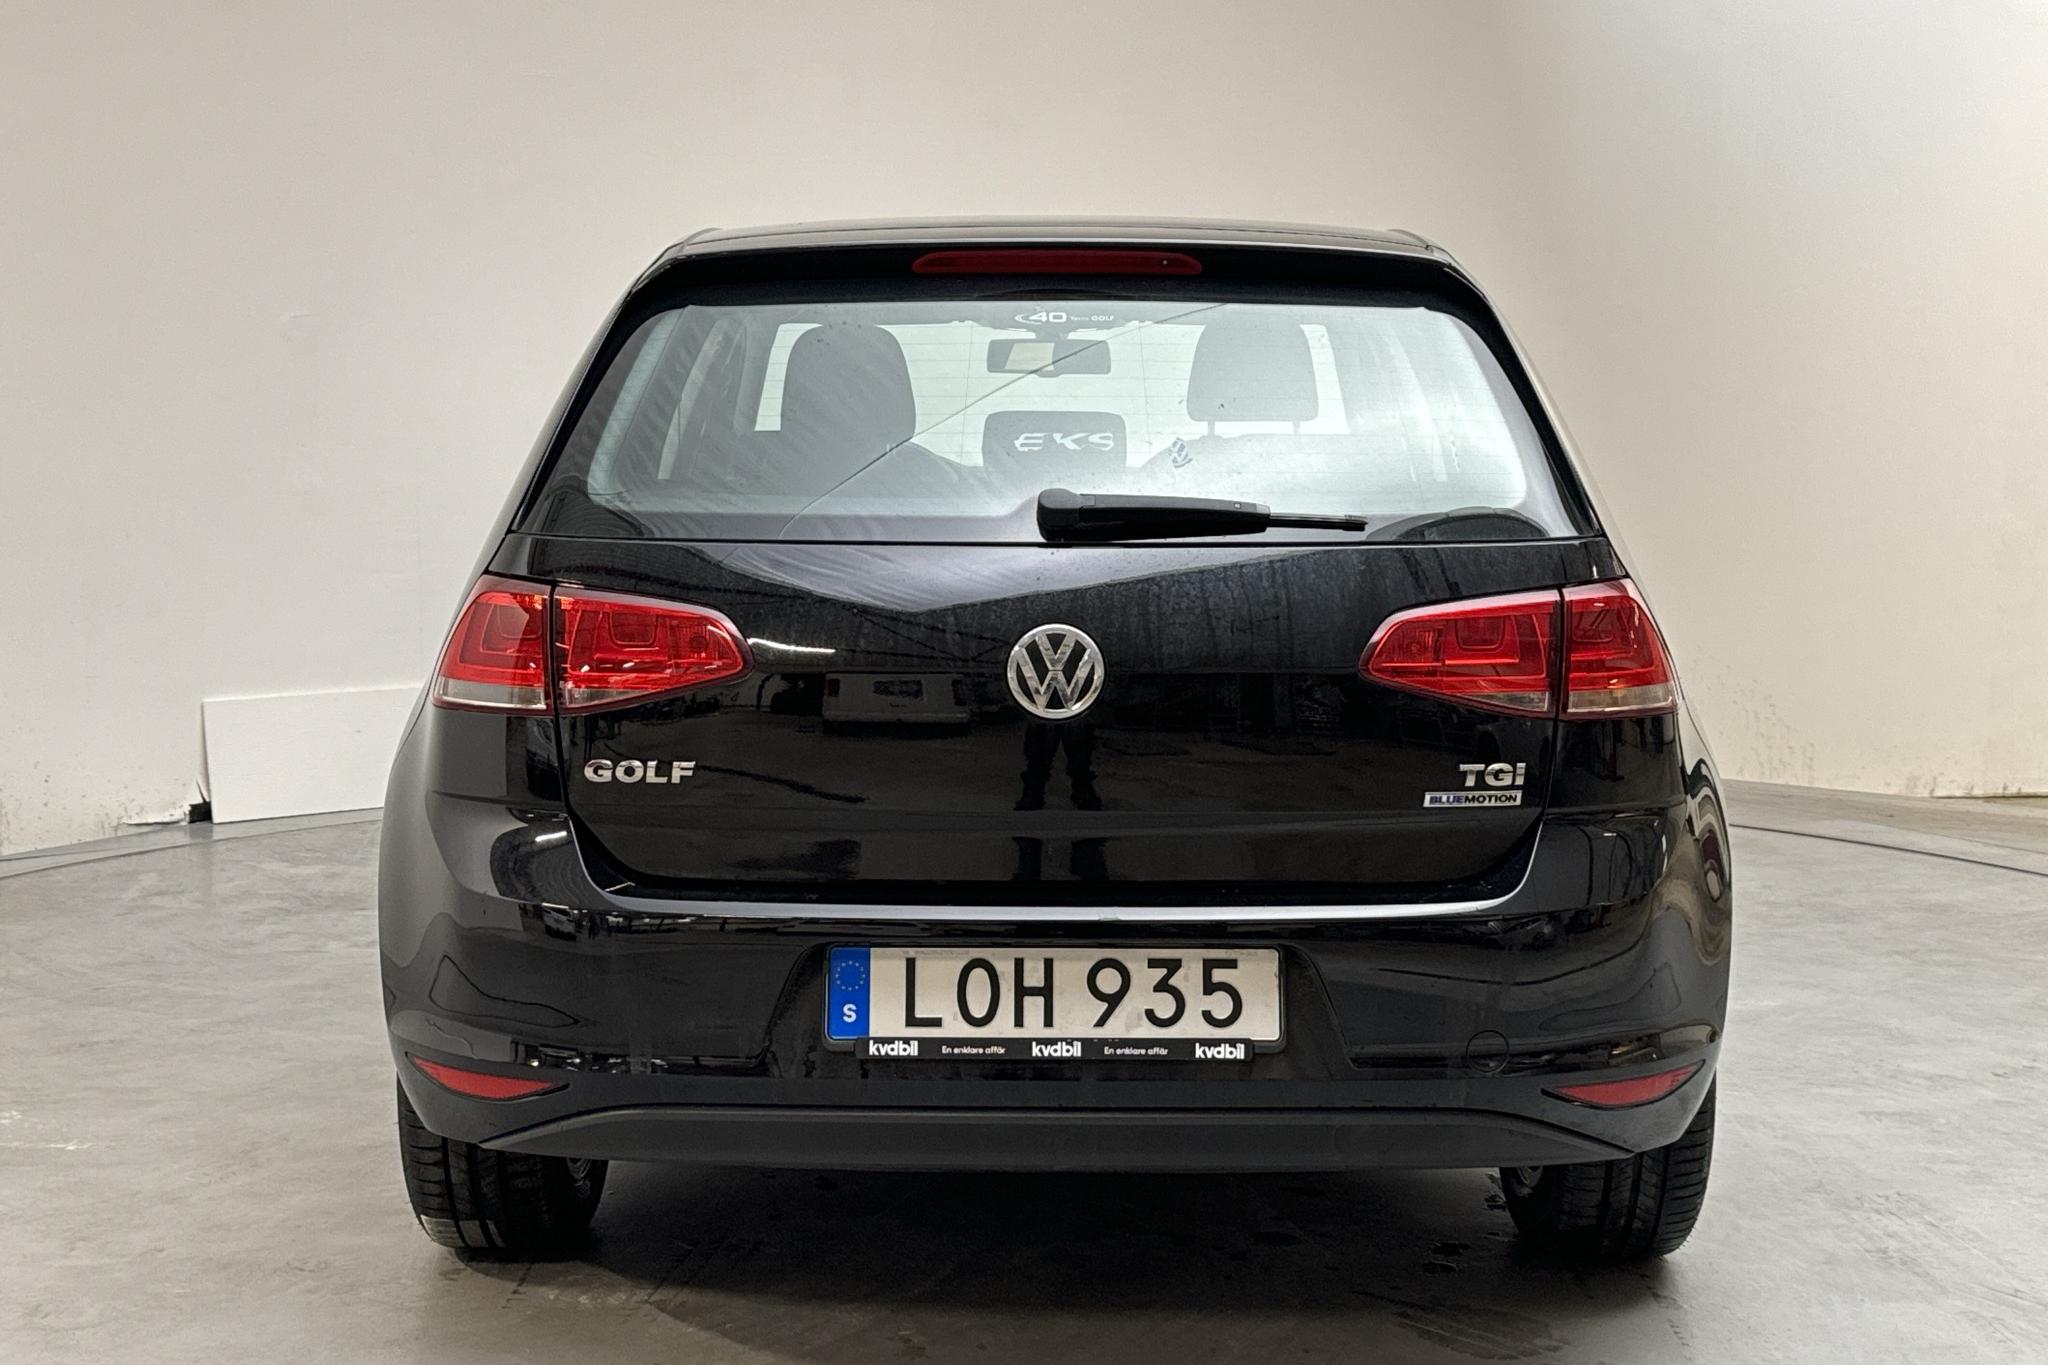 VW Golf VII 1.4 TGI 5dr (110hk) - 5 453 mil - Manuell - svart - 2015